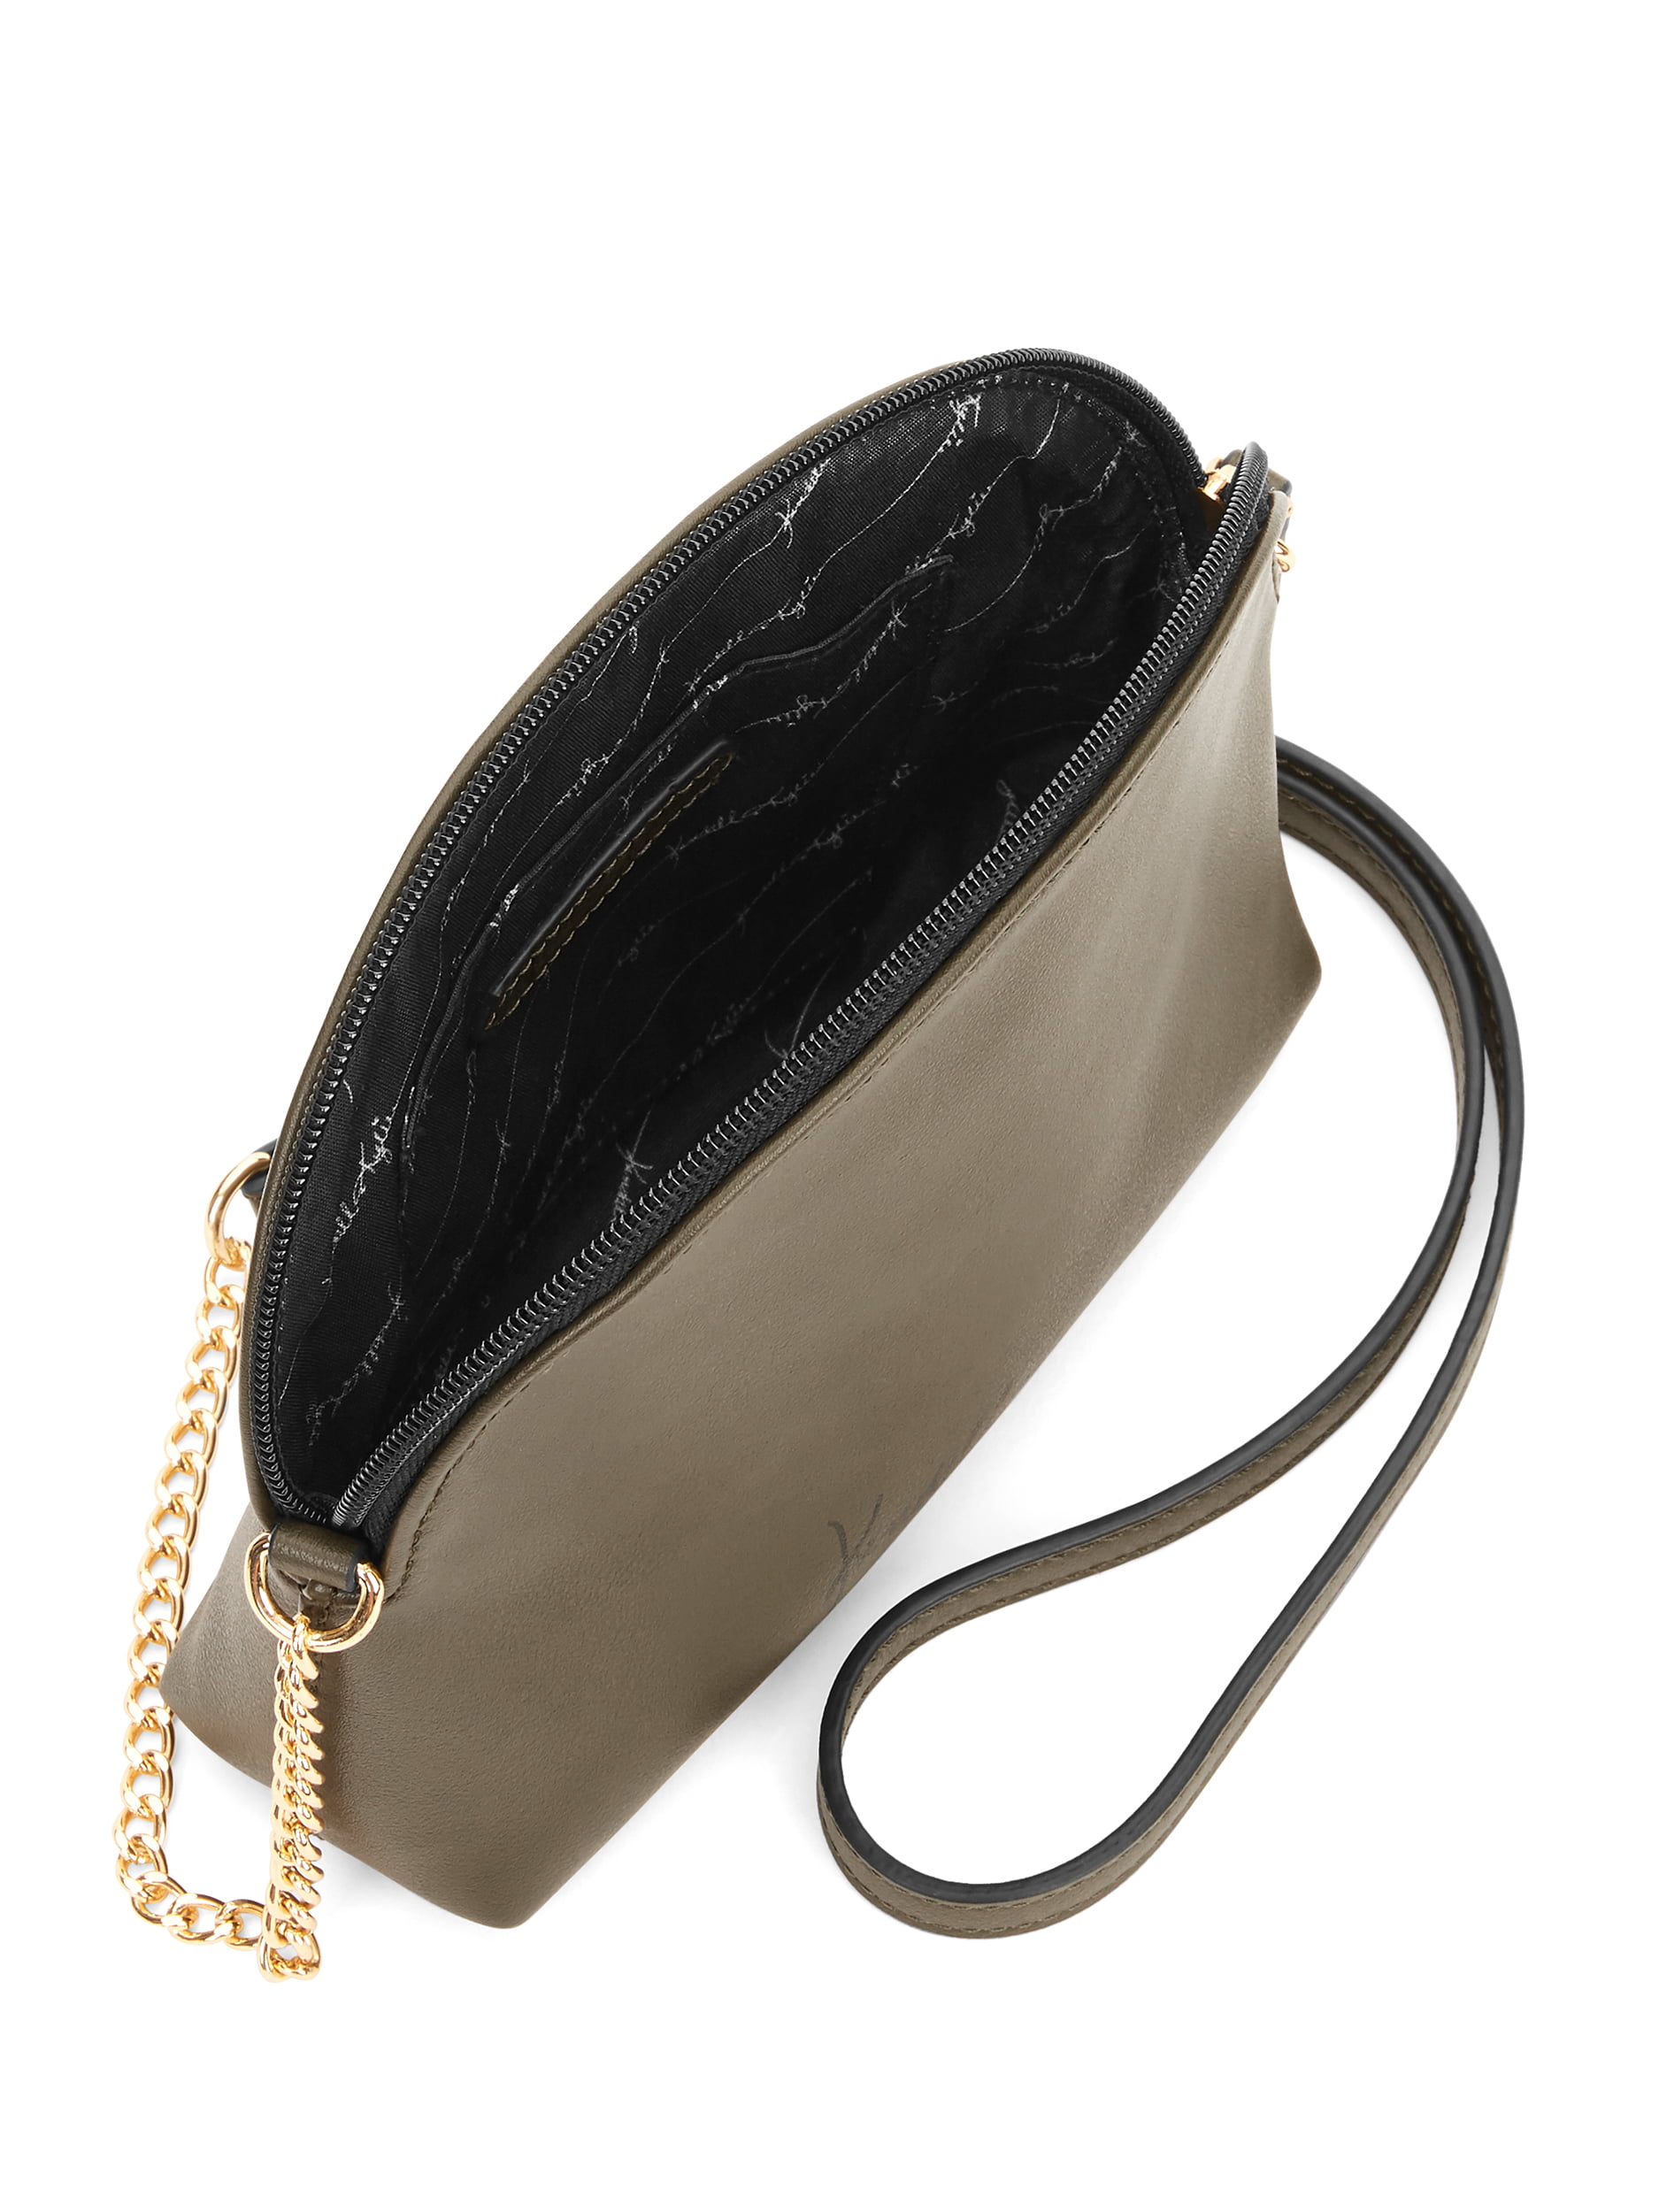 Kylie Jenner Handbags | POPSUGAR Fashion UK